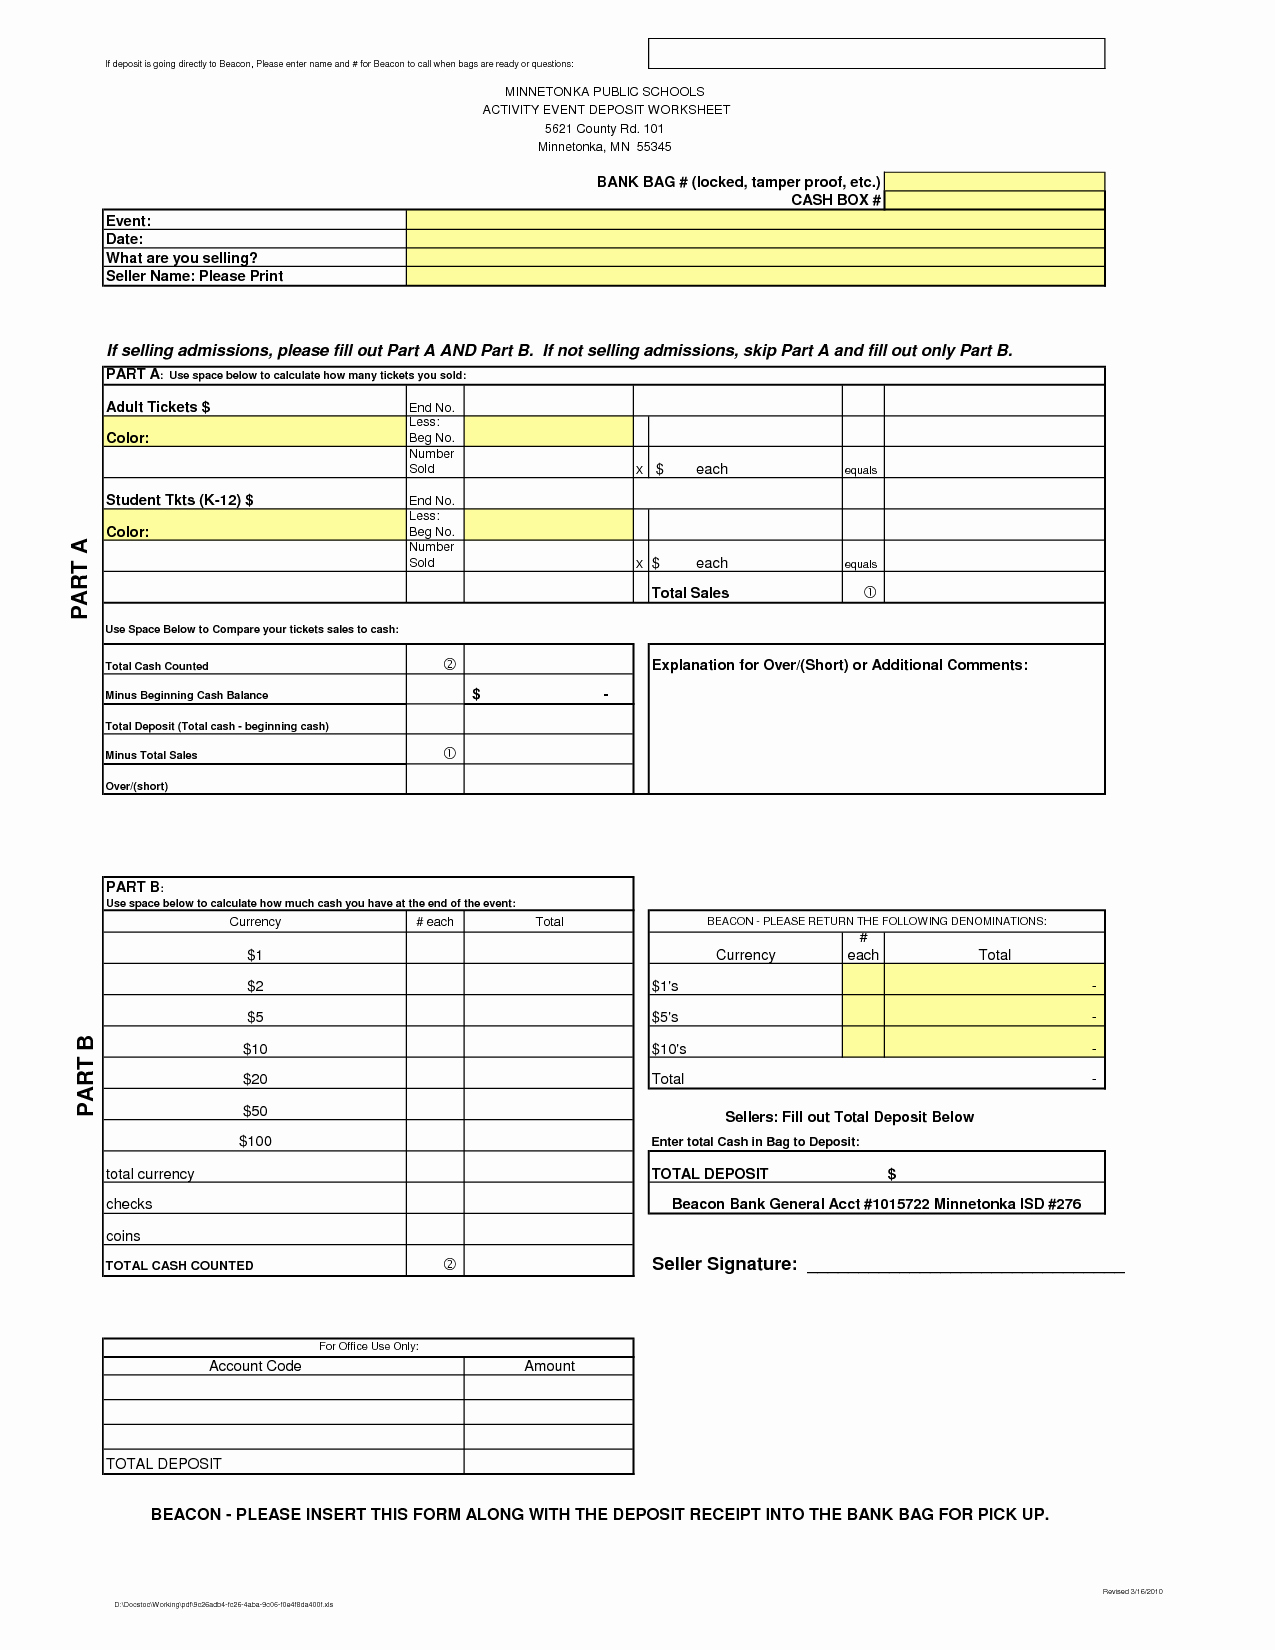 Cash Drawer Count Sheet Excel New Cash Register Count Sheet Excel 1000 Images About forms